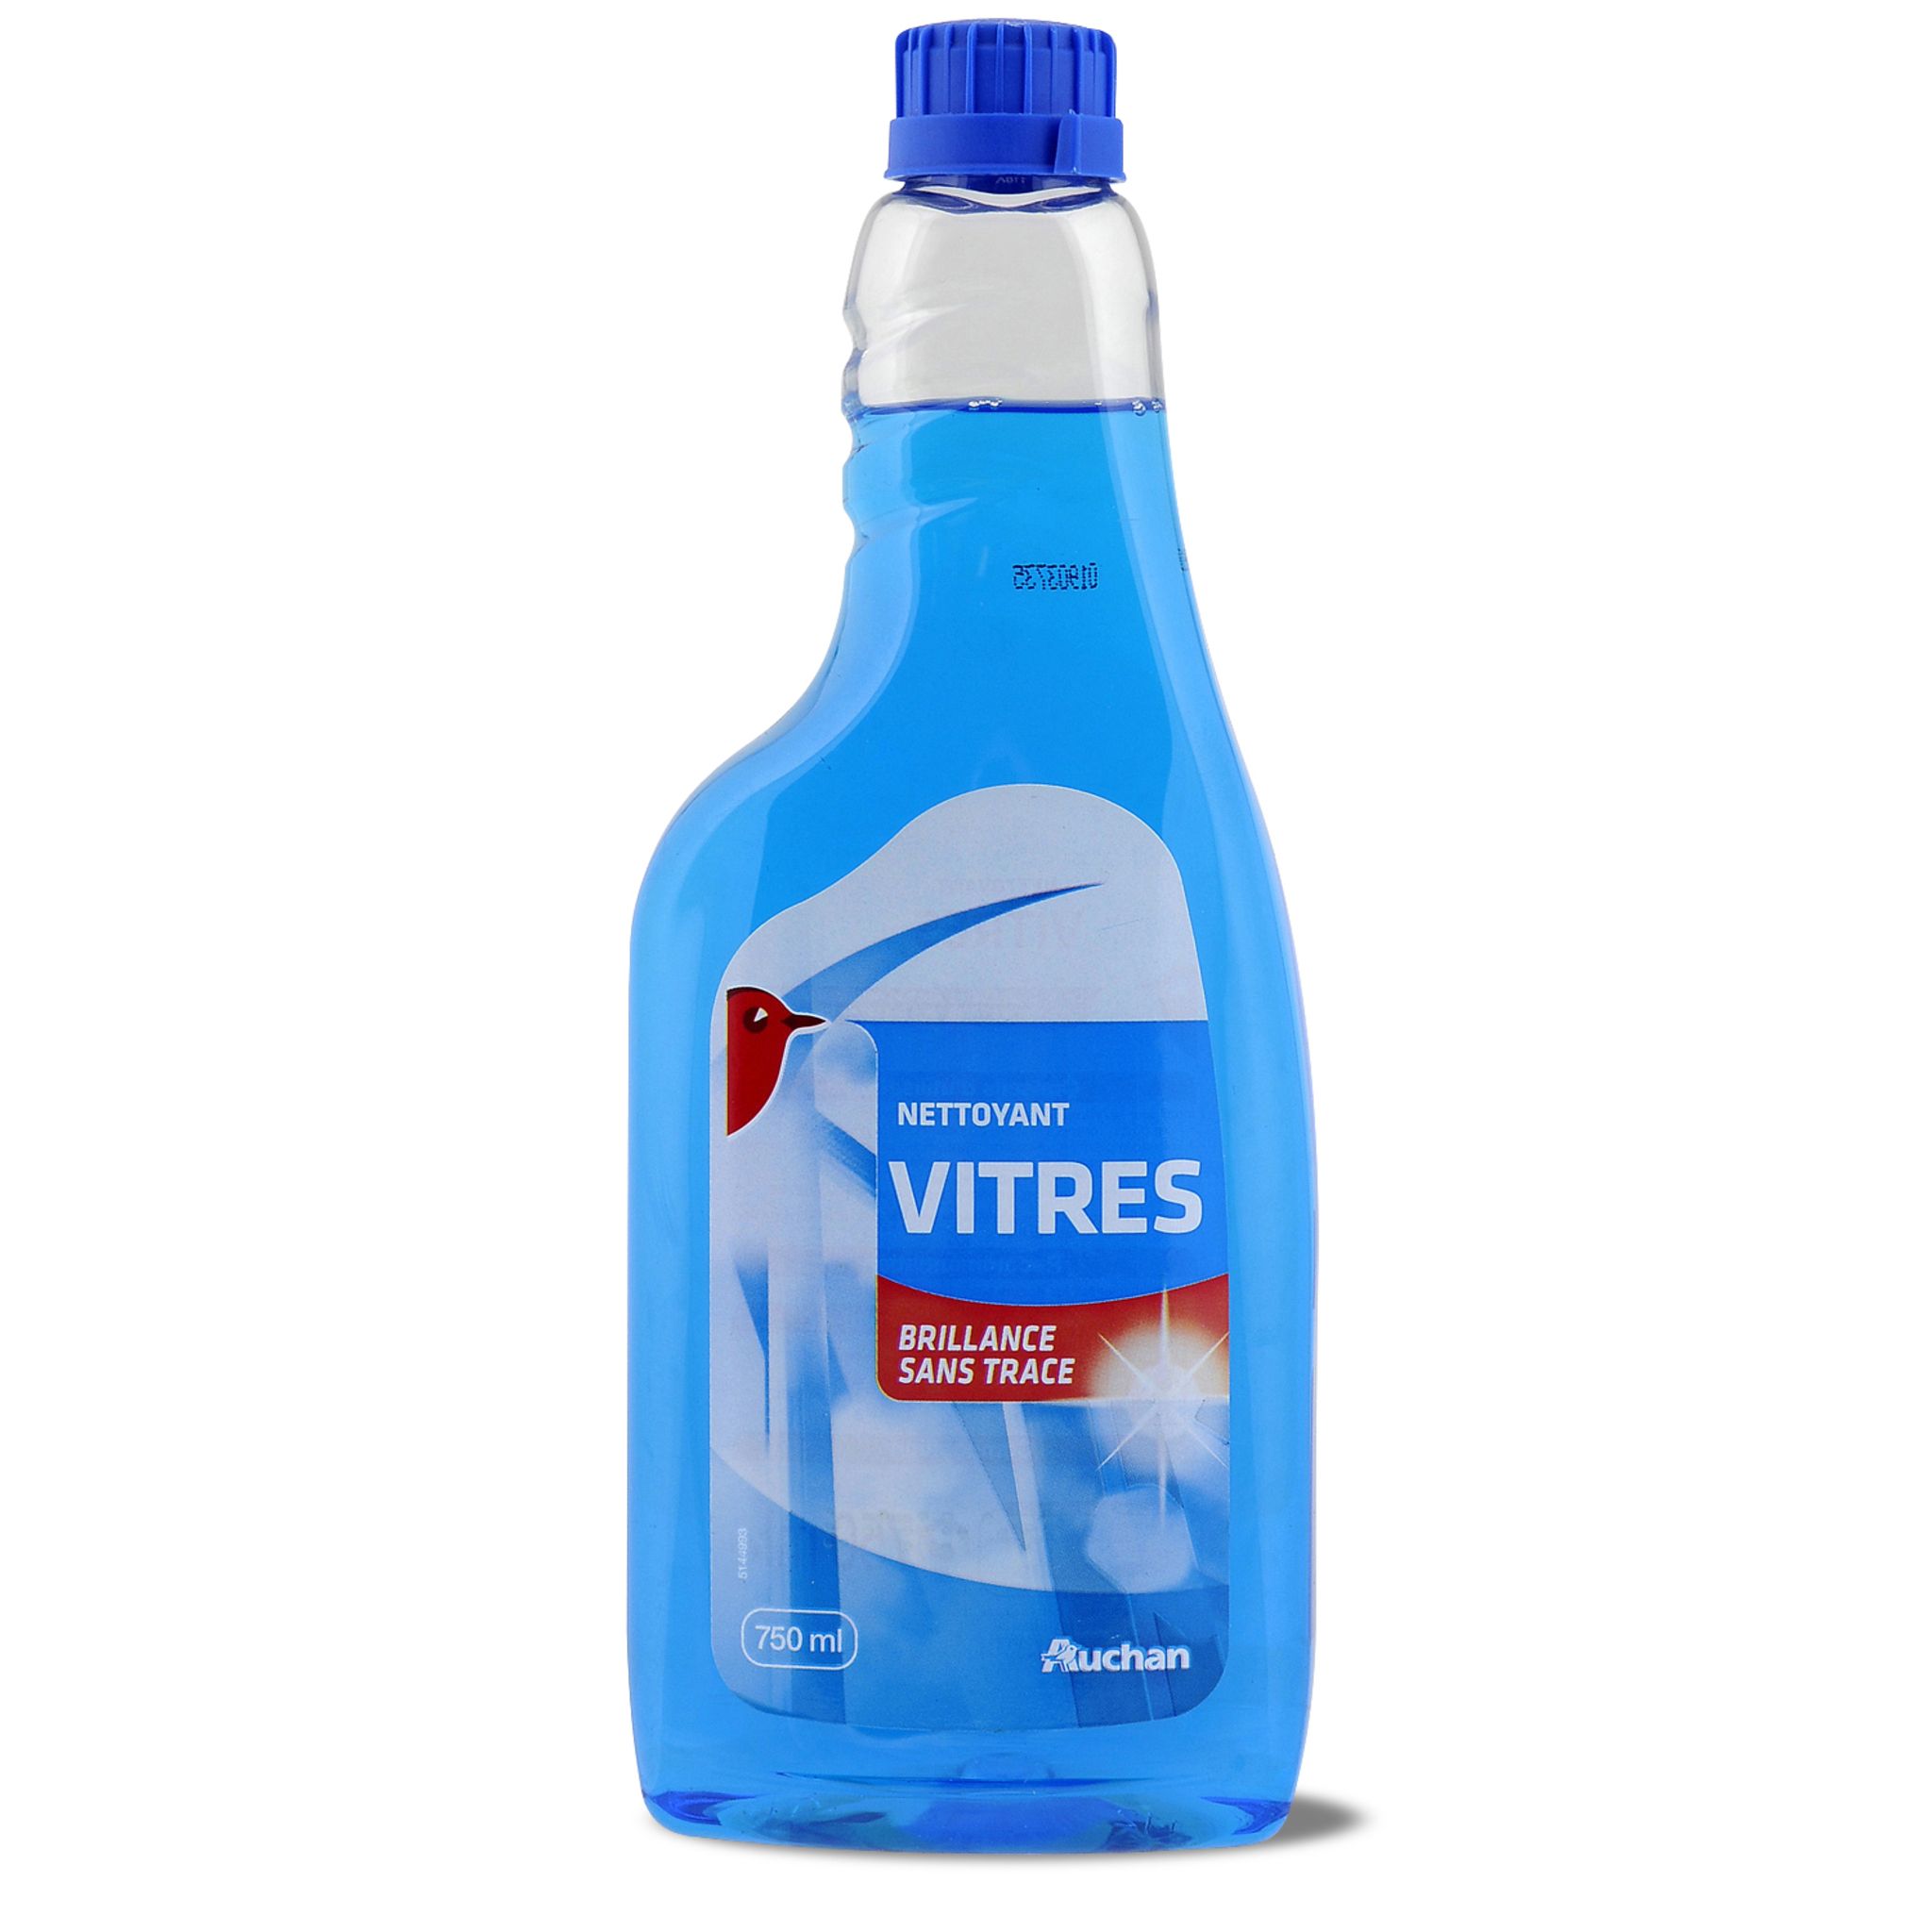 AUCHAN Auchan nettoyant vitres spray 750ml pas cher 